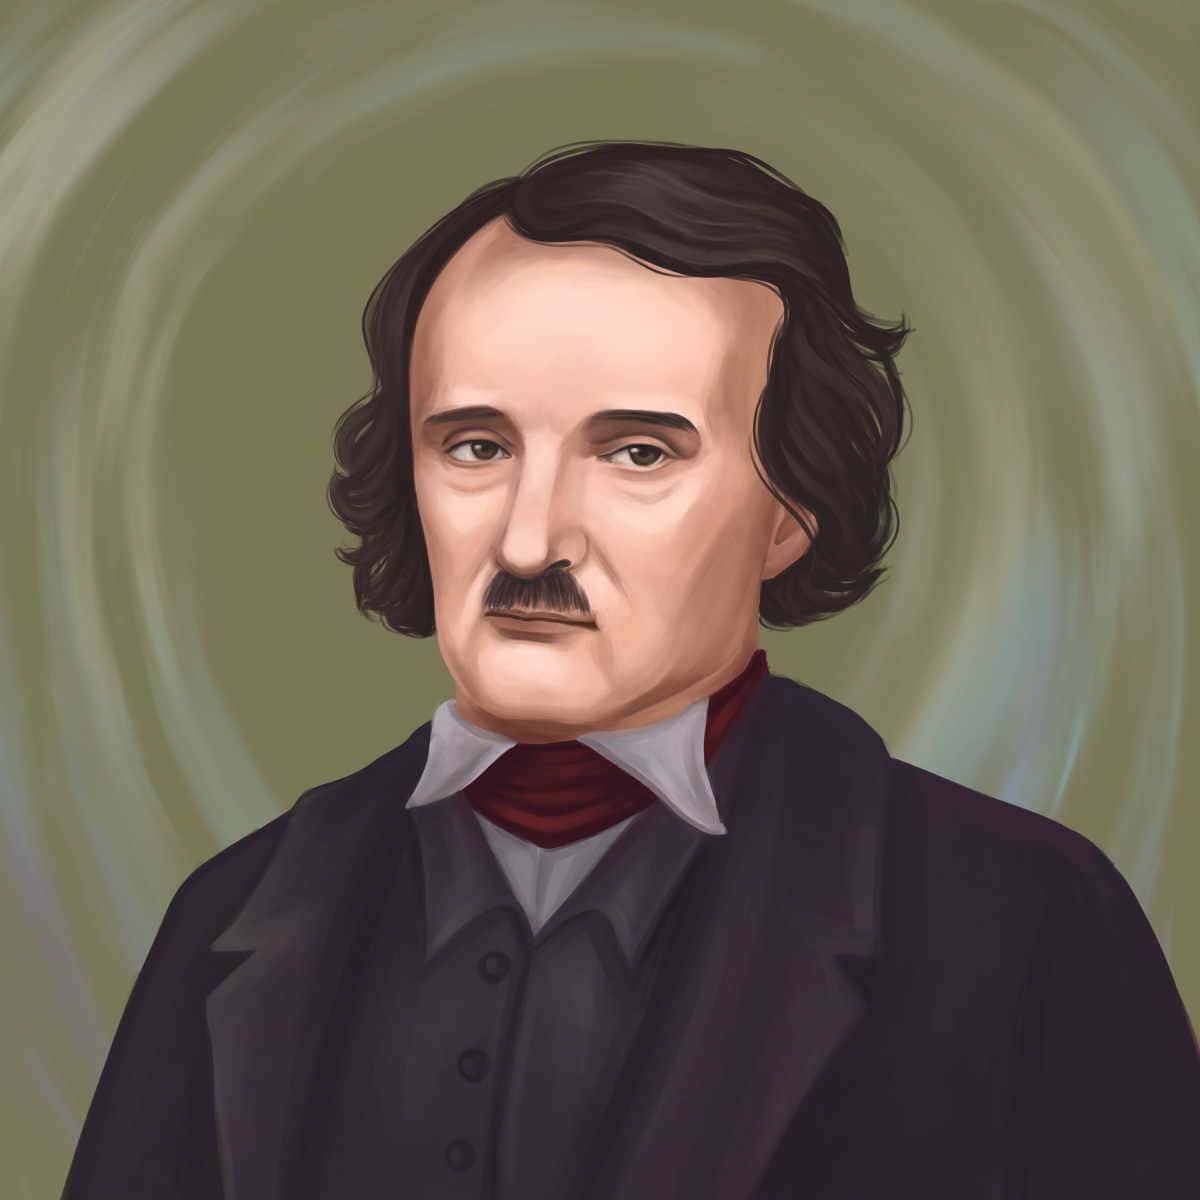 Edgar Allan Poe Illustration Background